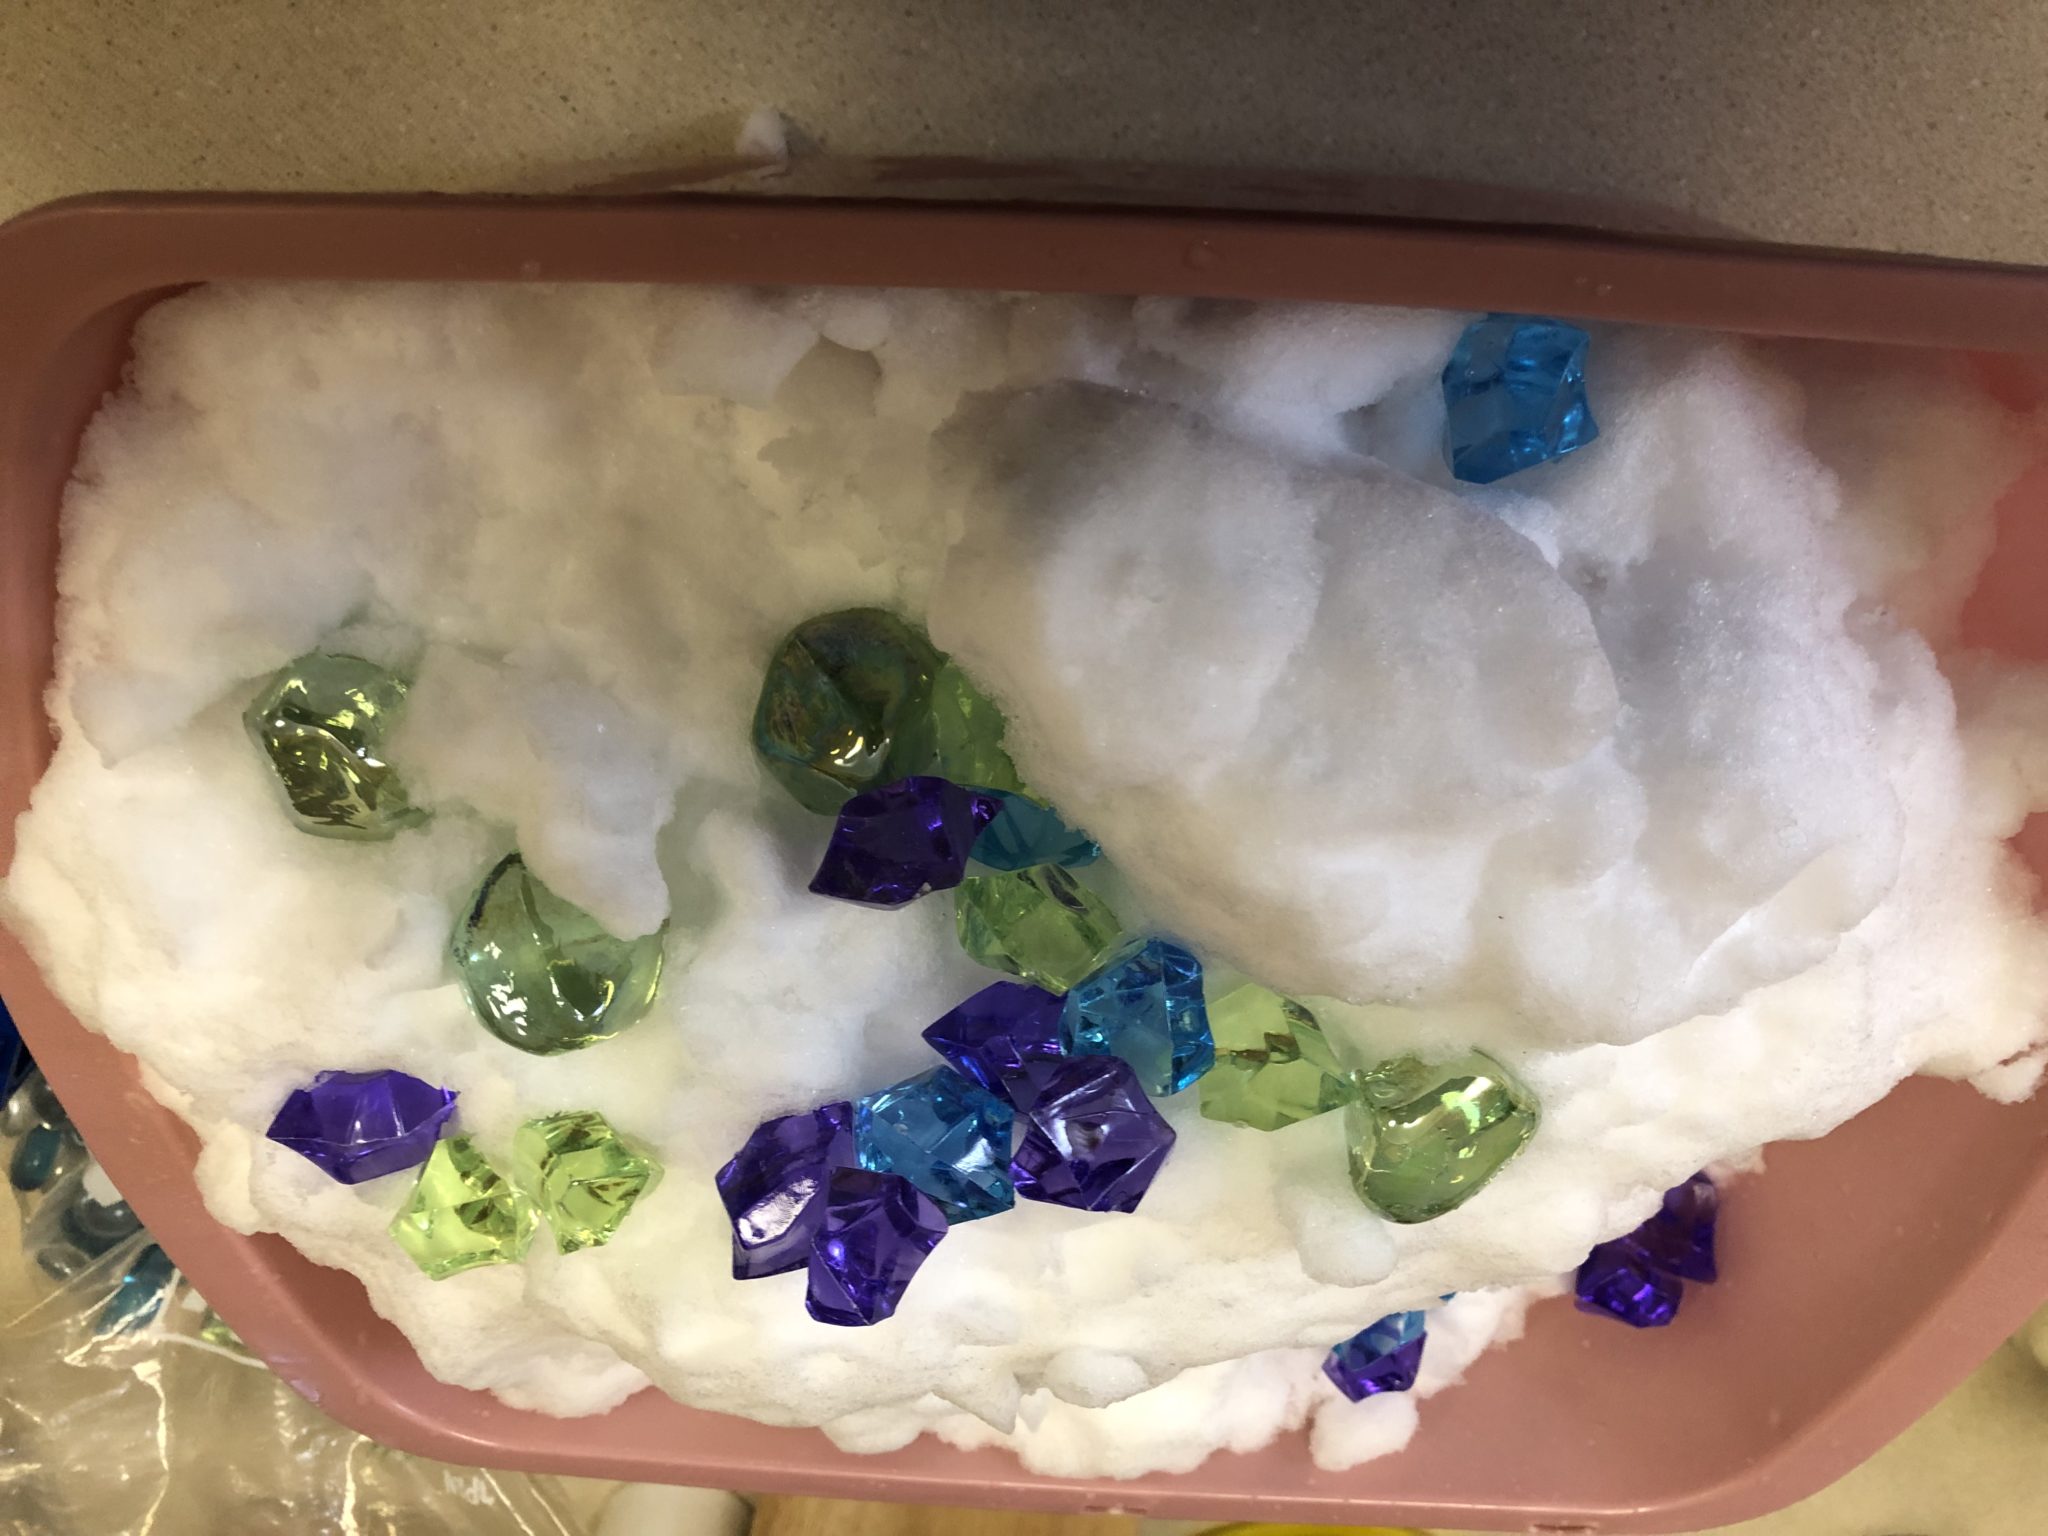 Snow sensory tub with stones